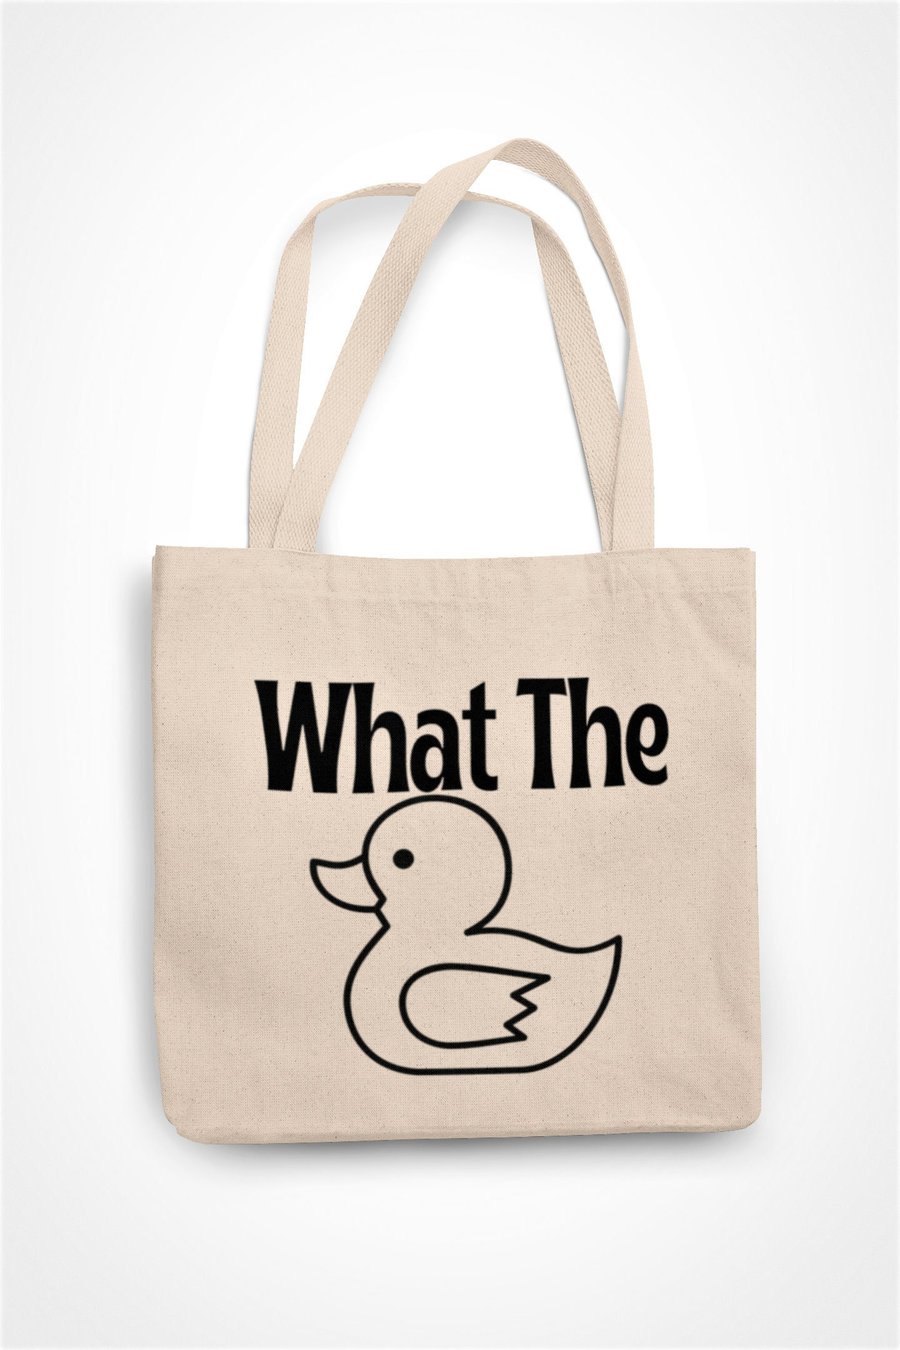 What The Duck Tote Bag Funny Non Swearing Novelty Pun Shopping Bag Joke 